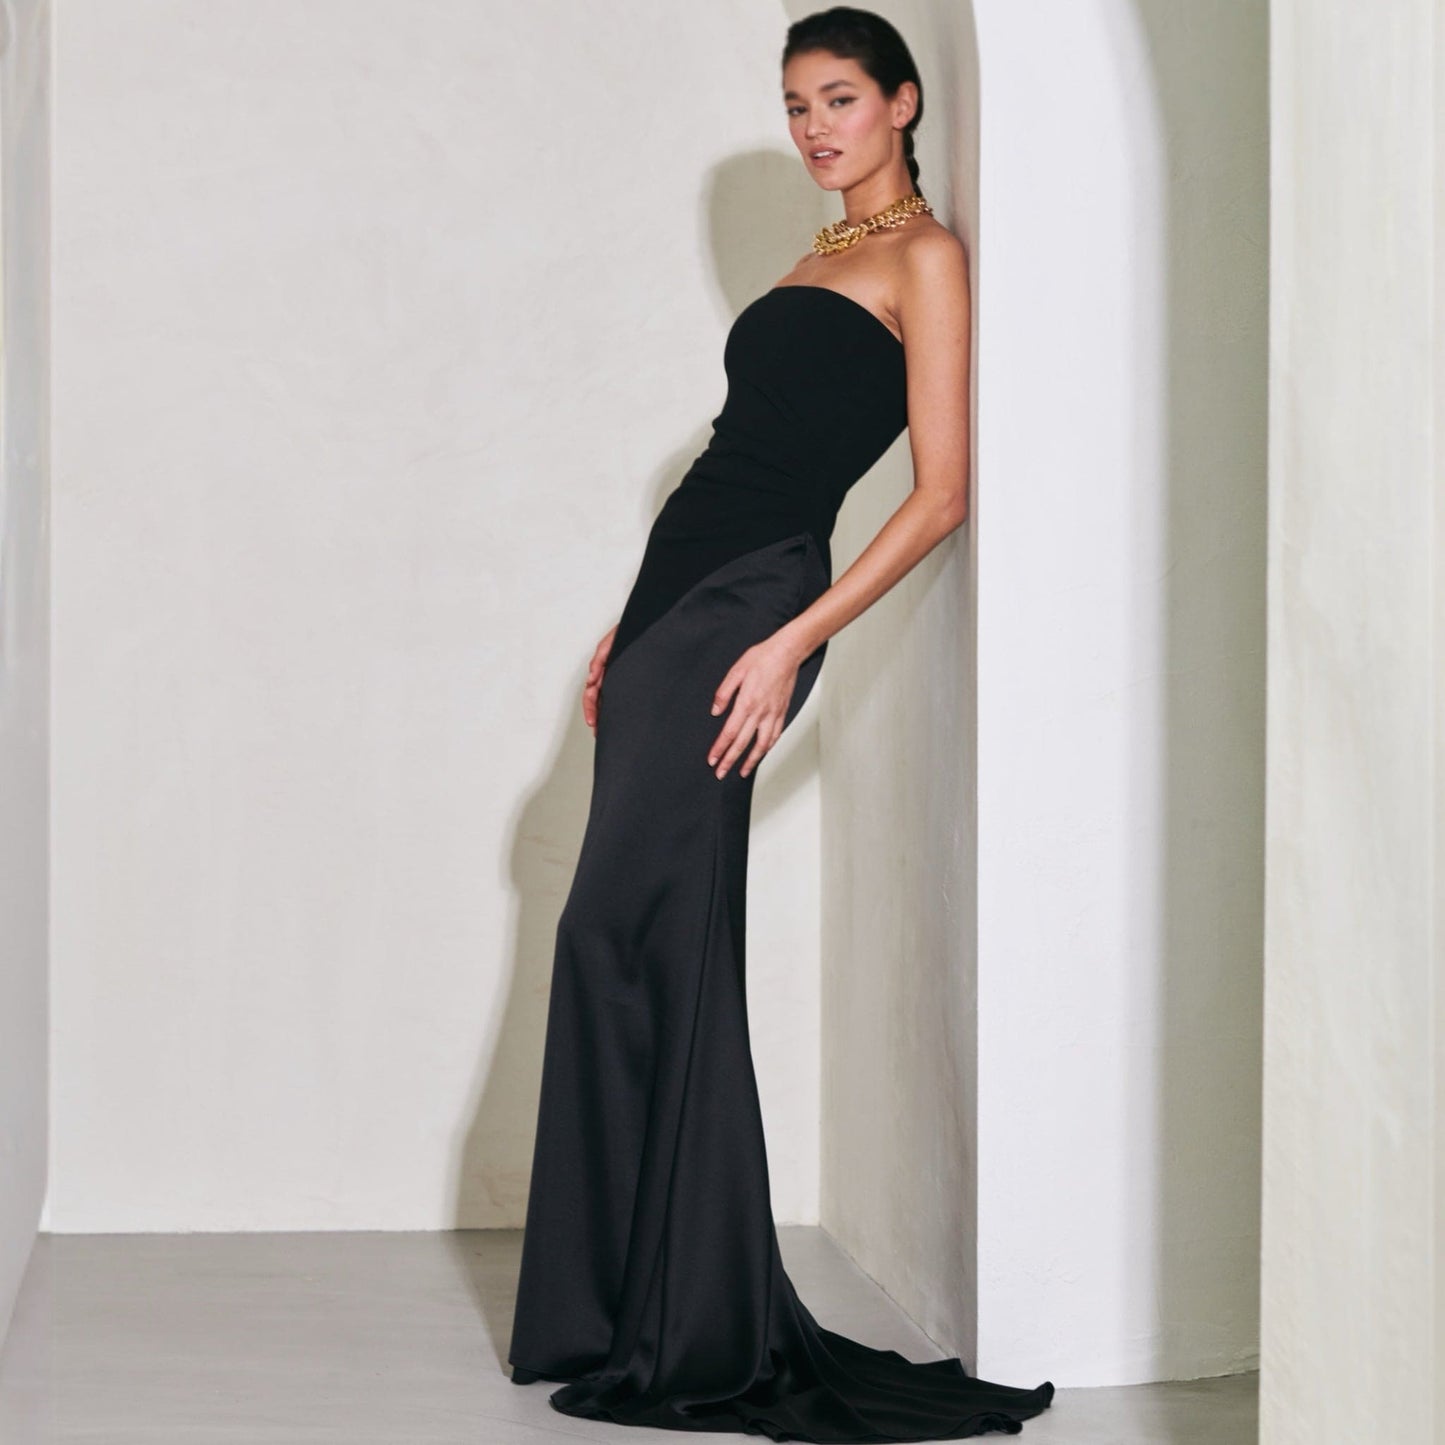 Black Satin Panel Strapless Gown